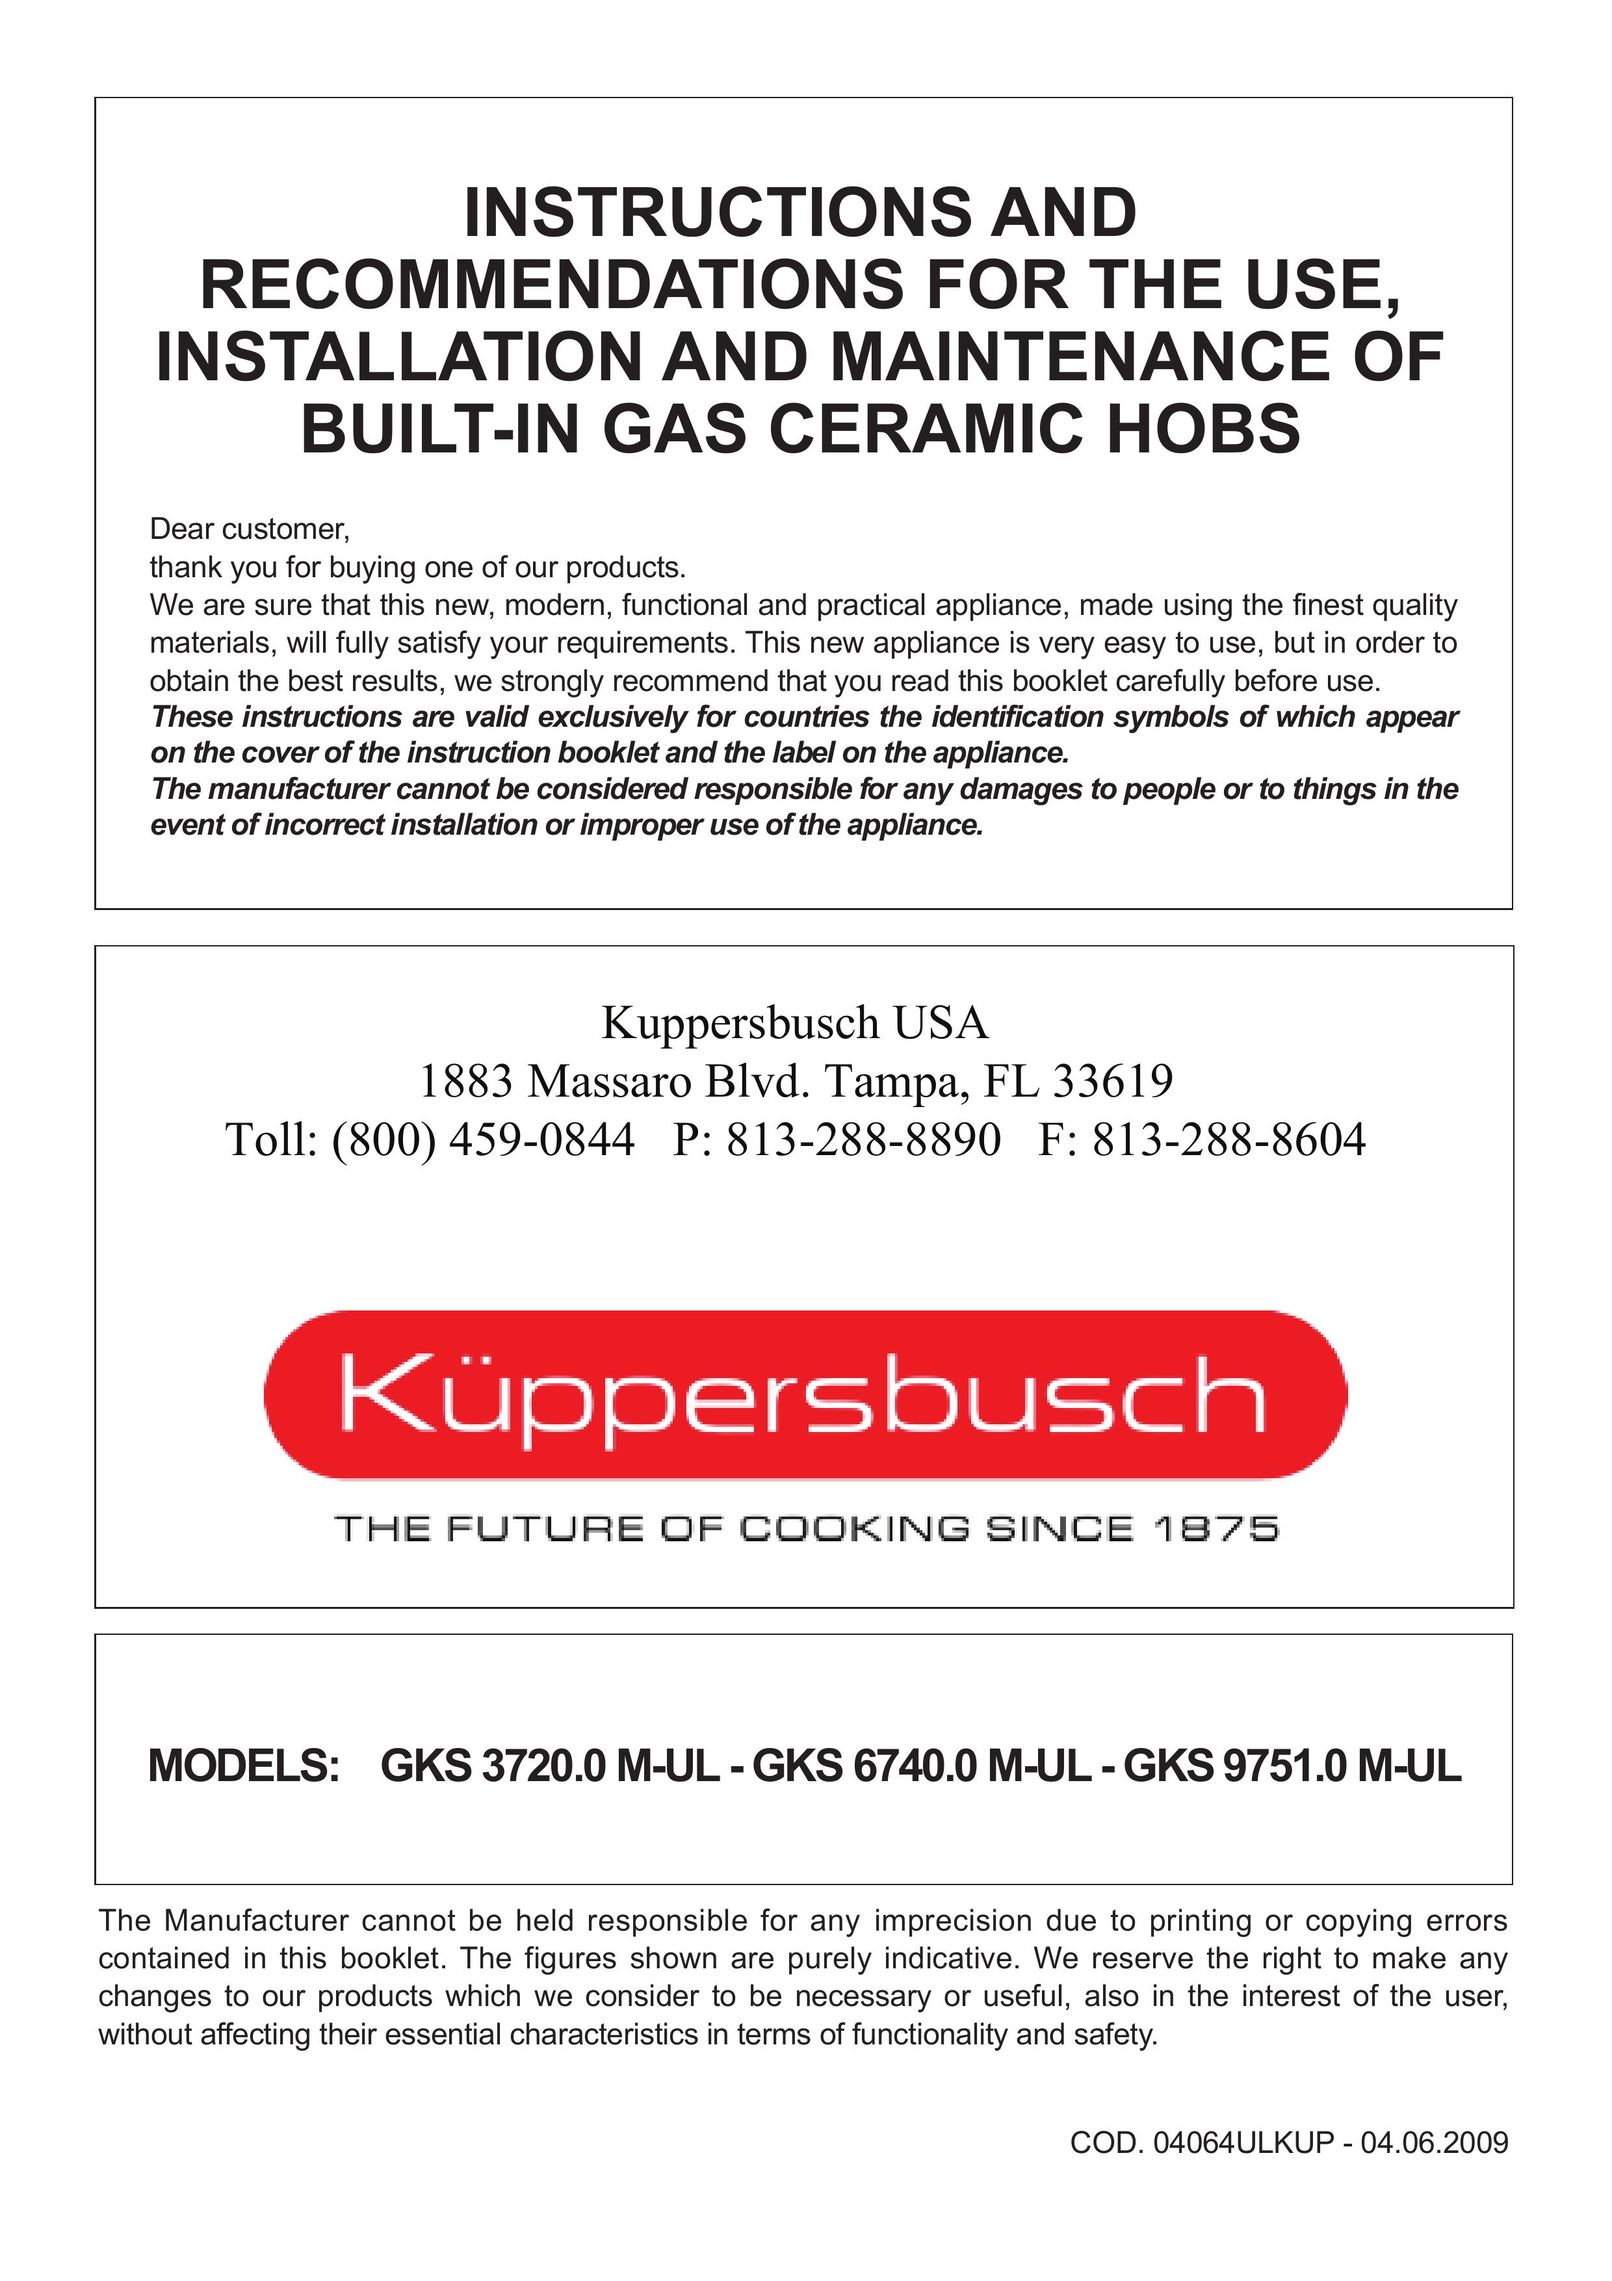 Kuppersbusch USA GKS9751.0 M-UL Cooktop User Manual